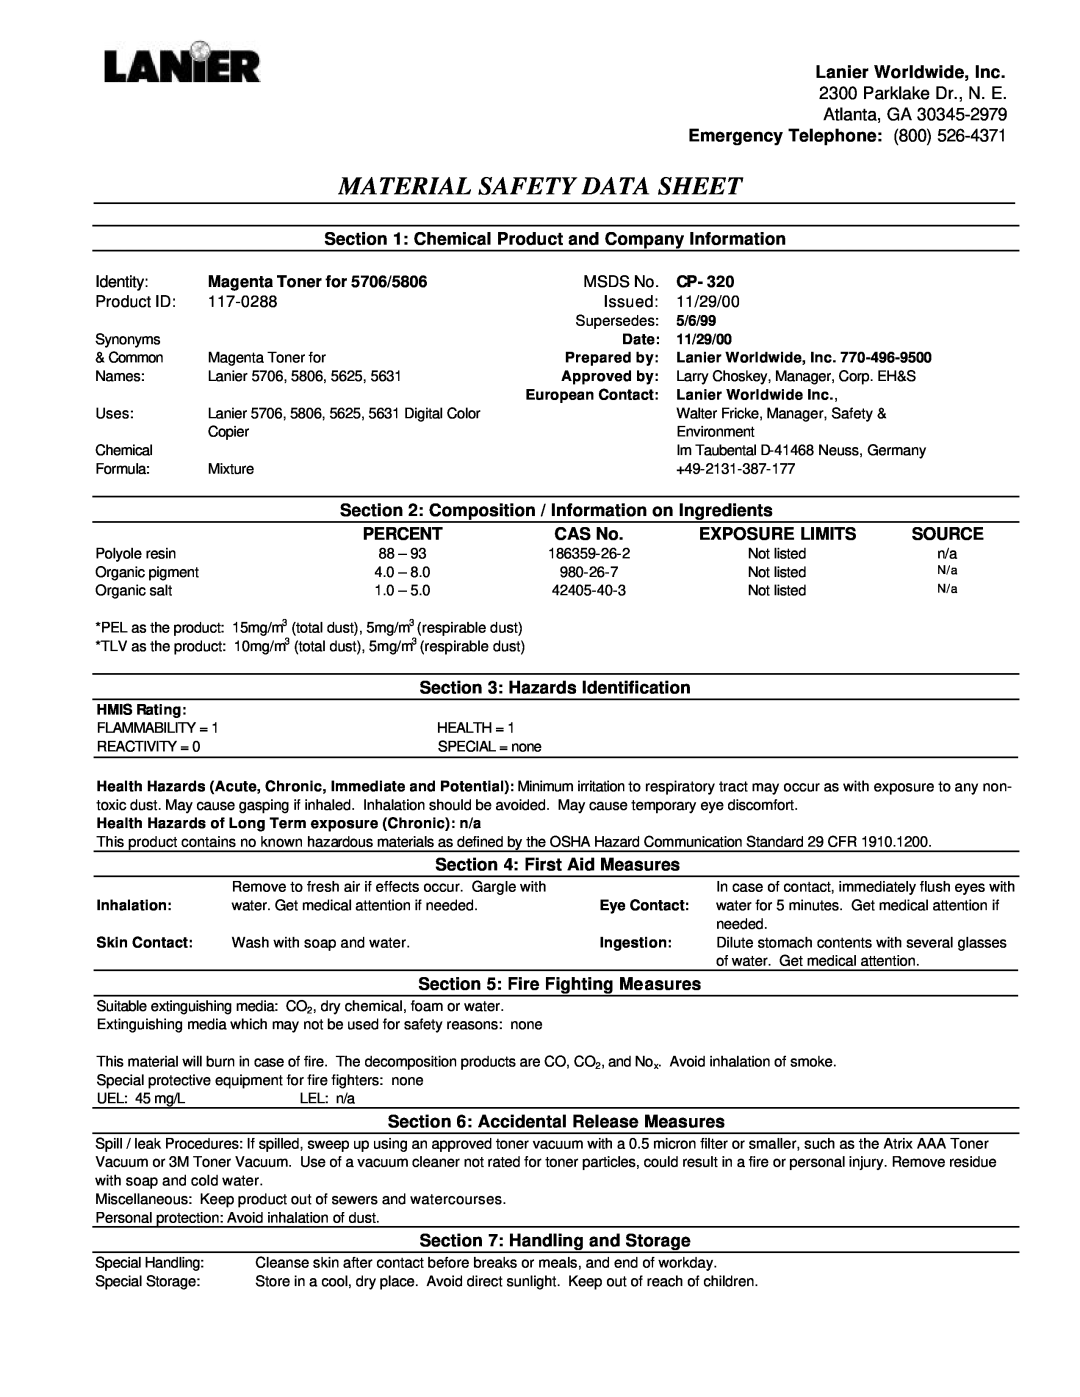 Lanier M1D manual Material Safety Data Sheet 